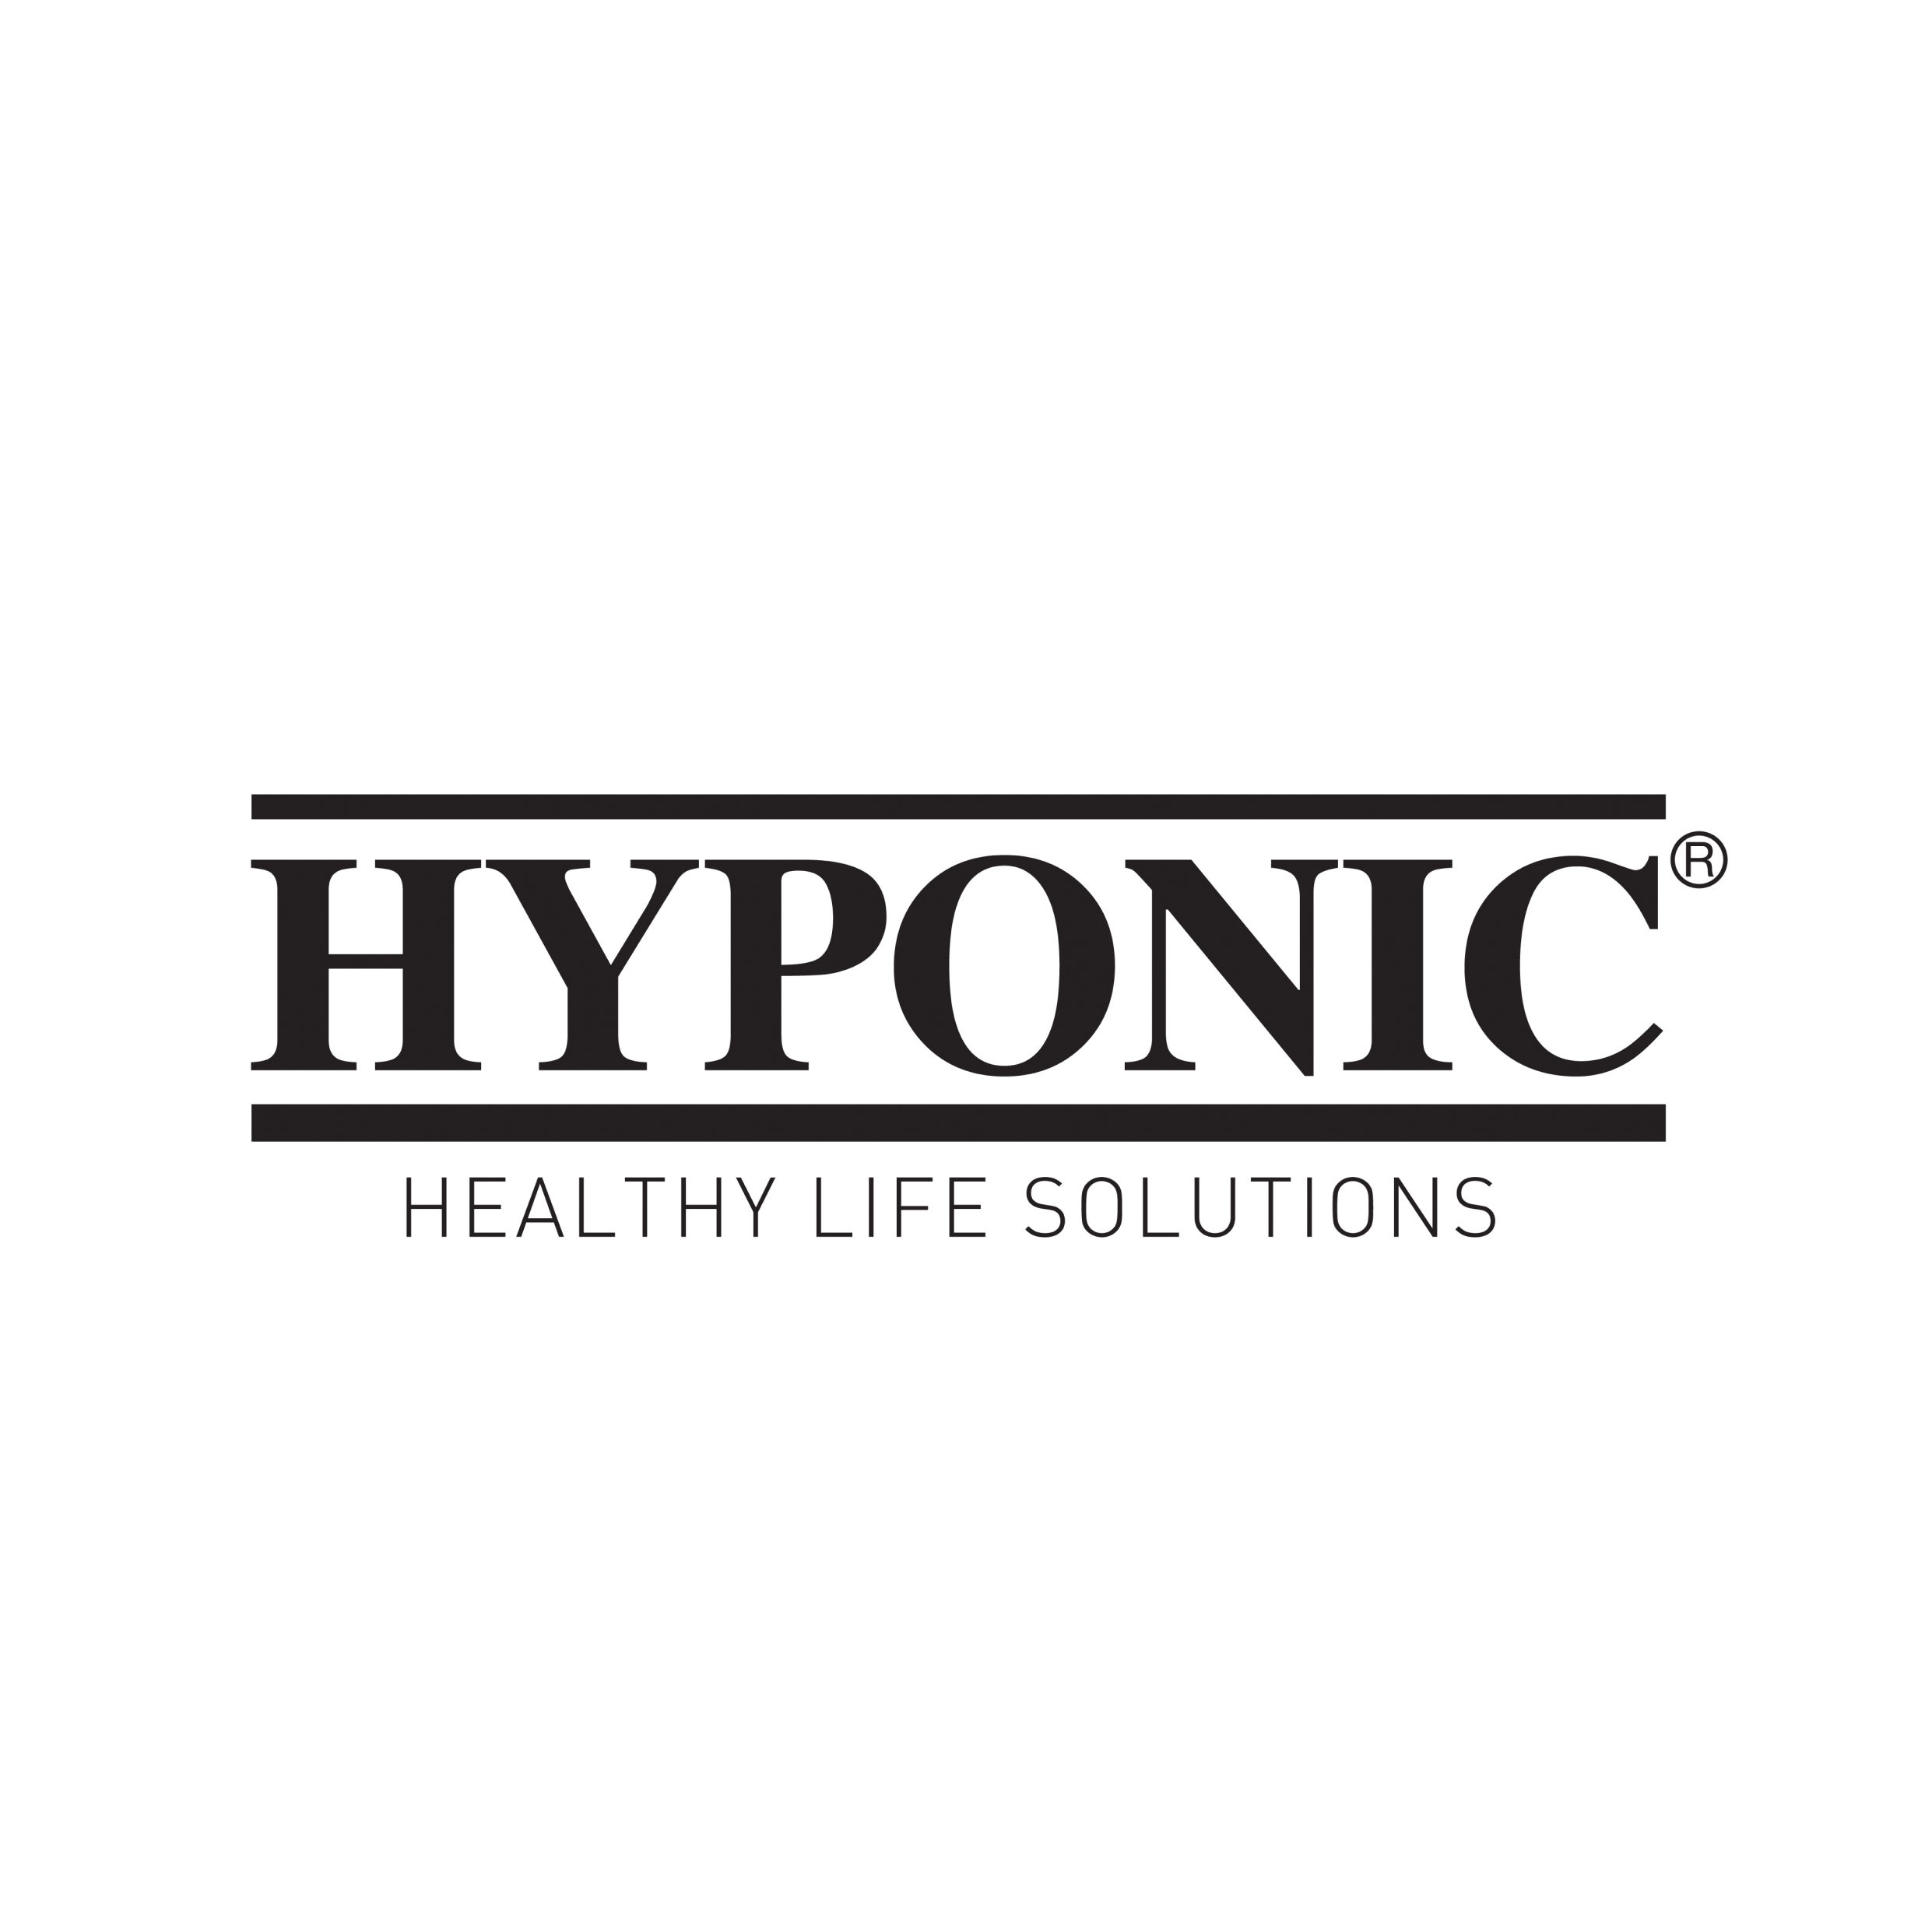 Hyponic